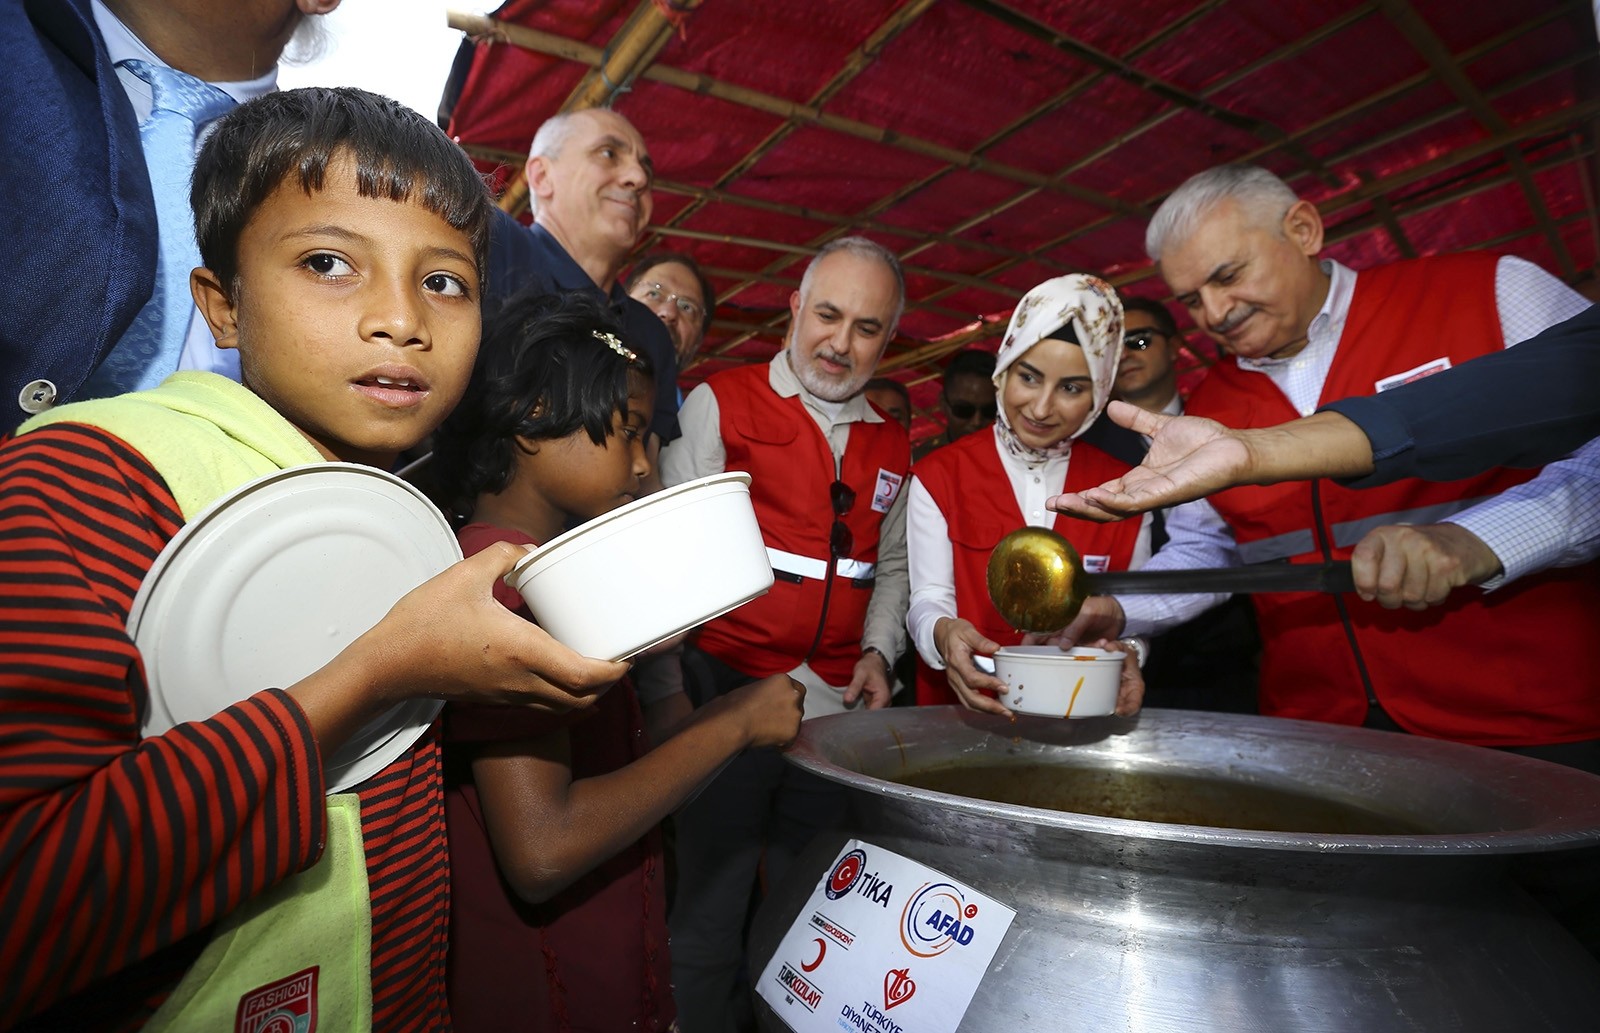 PM Yıldırım urges global community to take action for Rohingya crisis